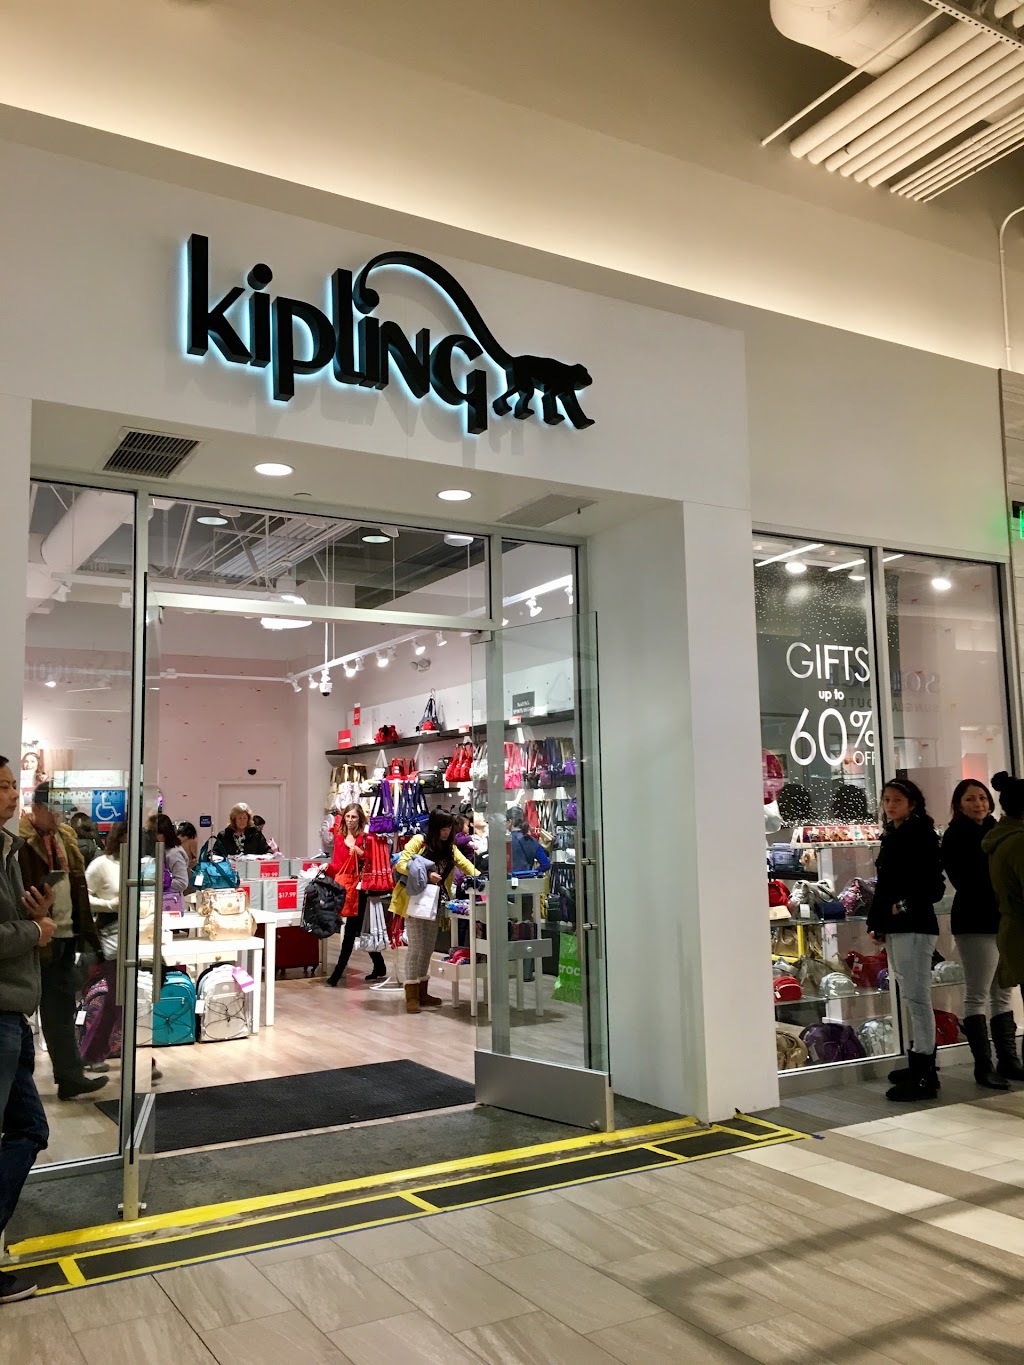 Kipling | 447 Great Mall Dr Suite #232, Milpitas, CA 95035 | Phone: (408) 935-8221